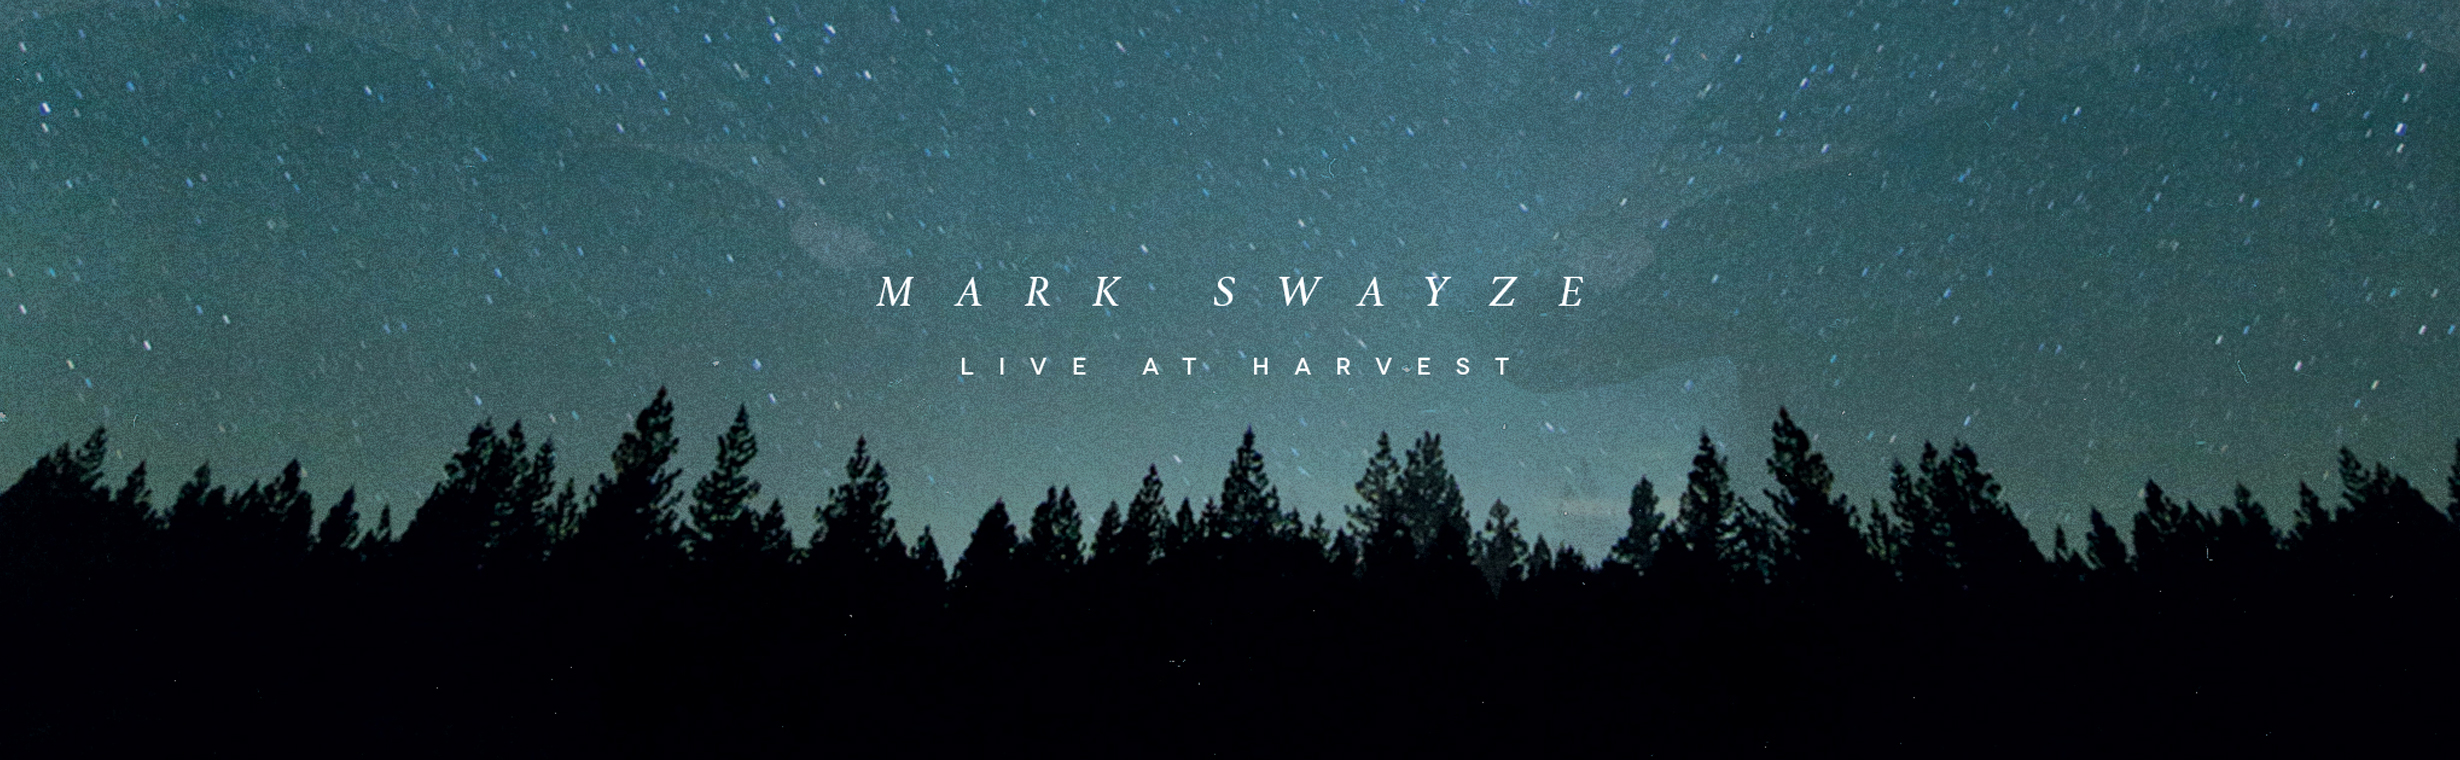 Mark Swayze